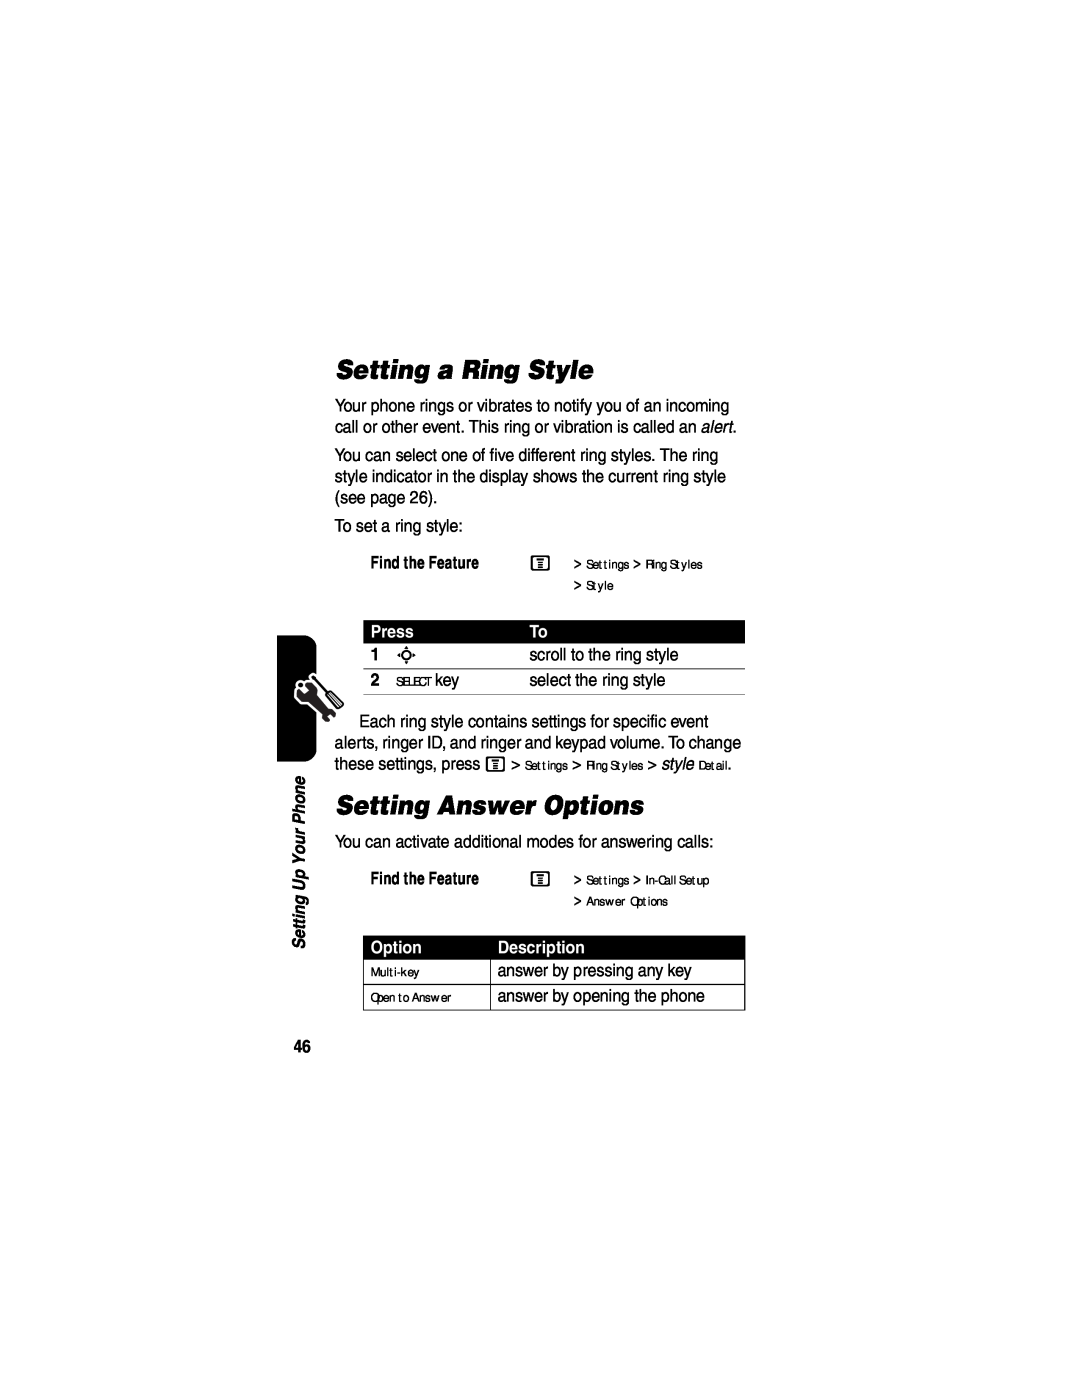 Motorola V555 manual Setting a Ring Style, Setting Answer Options, Press, Description 